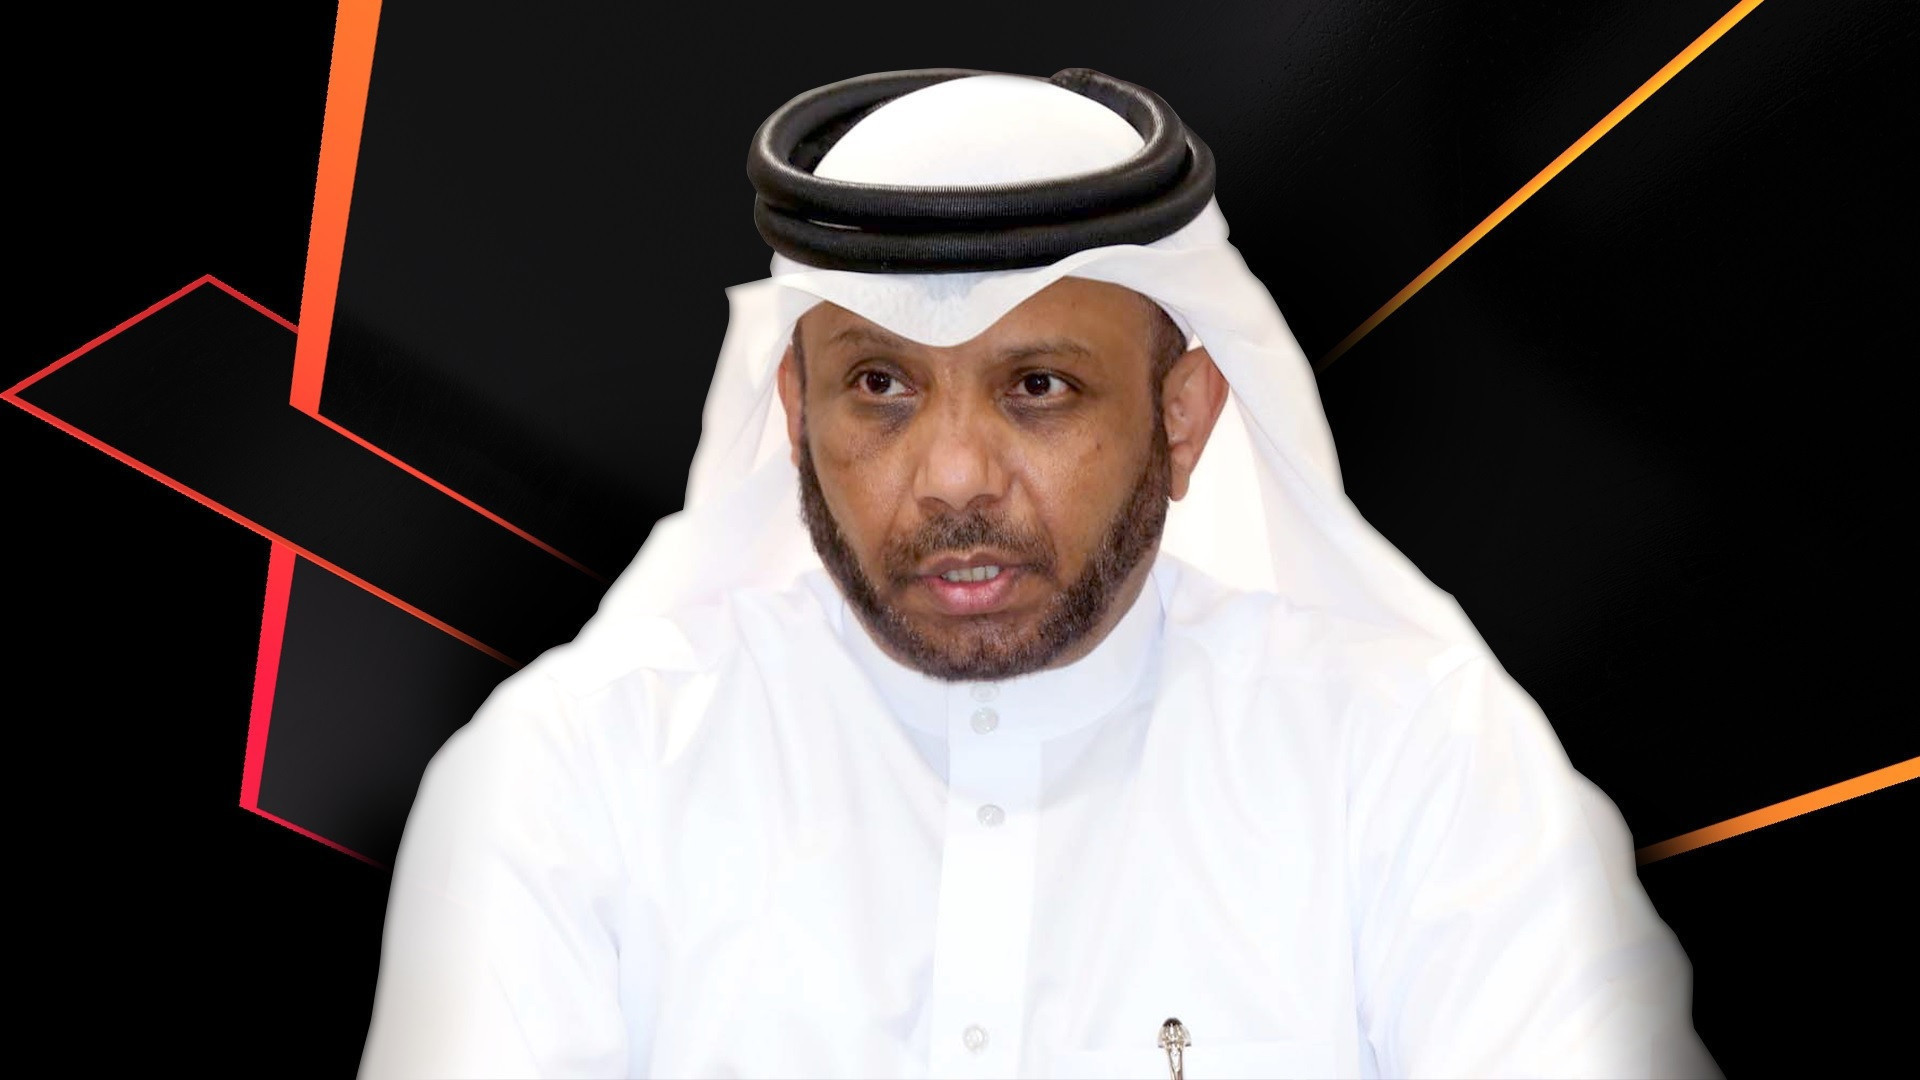 ITTF Deputy President Khalil Al-Mohannadi has failed to secure a visa to enter the United States ©World Table Tennis